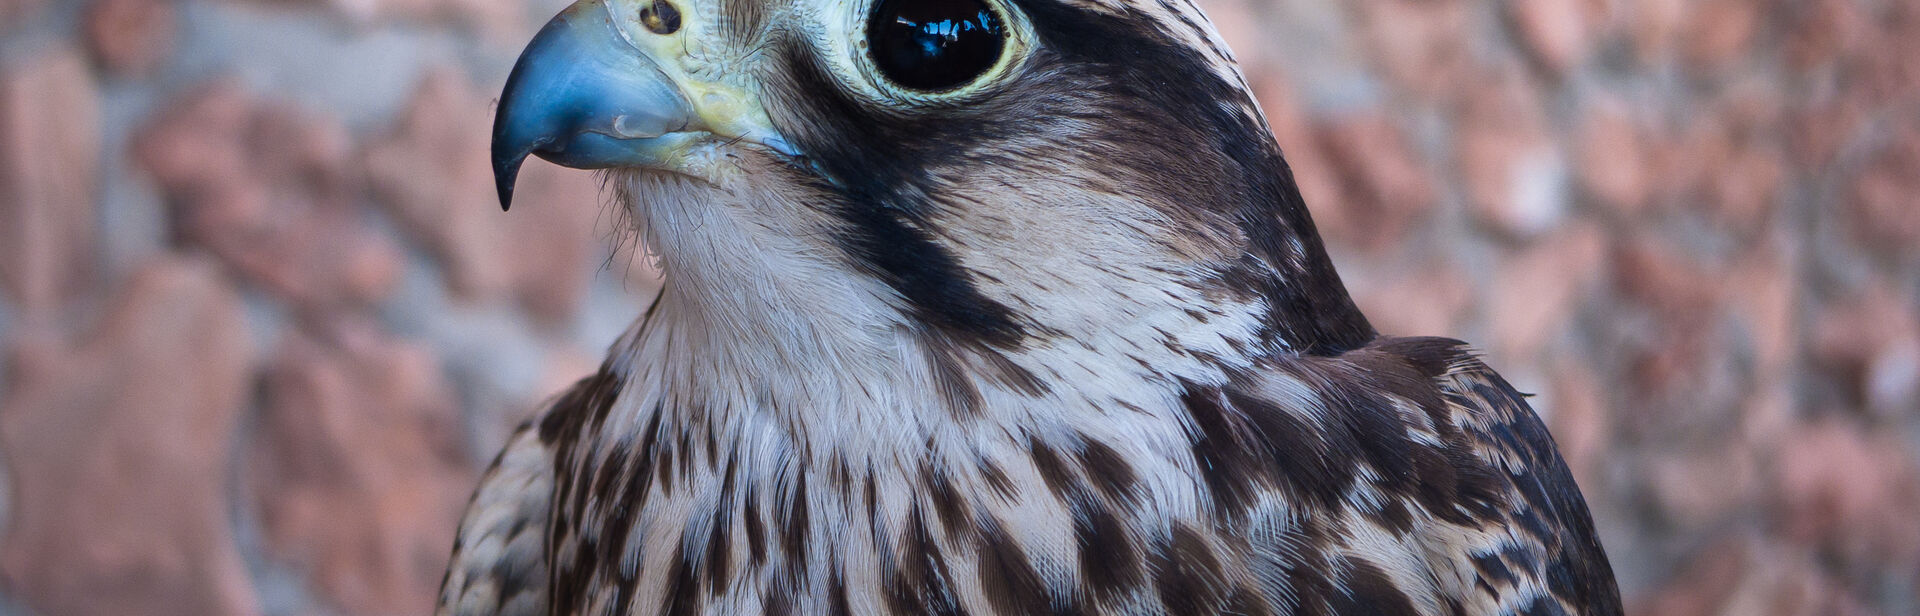 a close up of a falcon